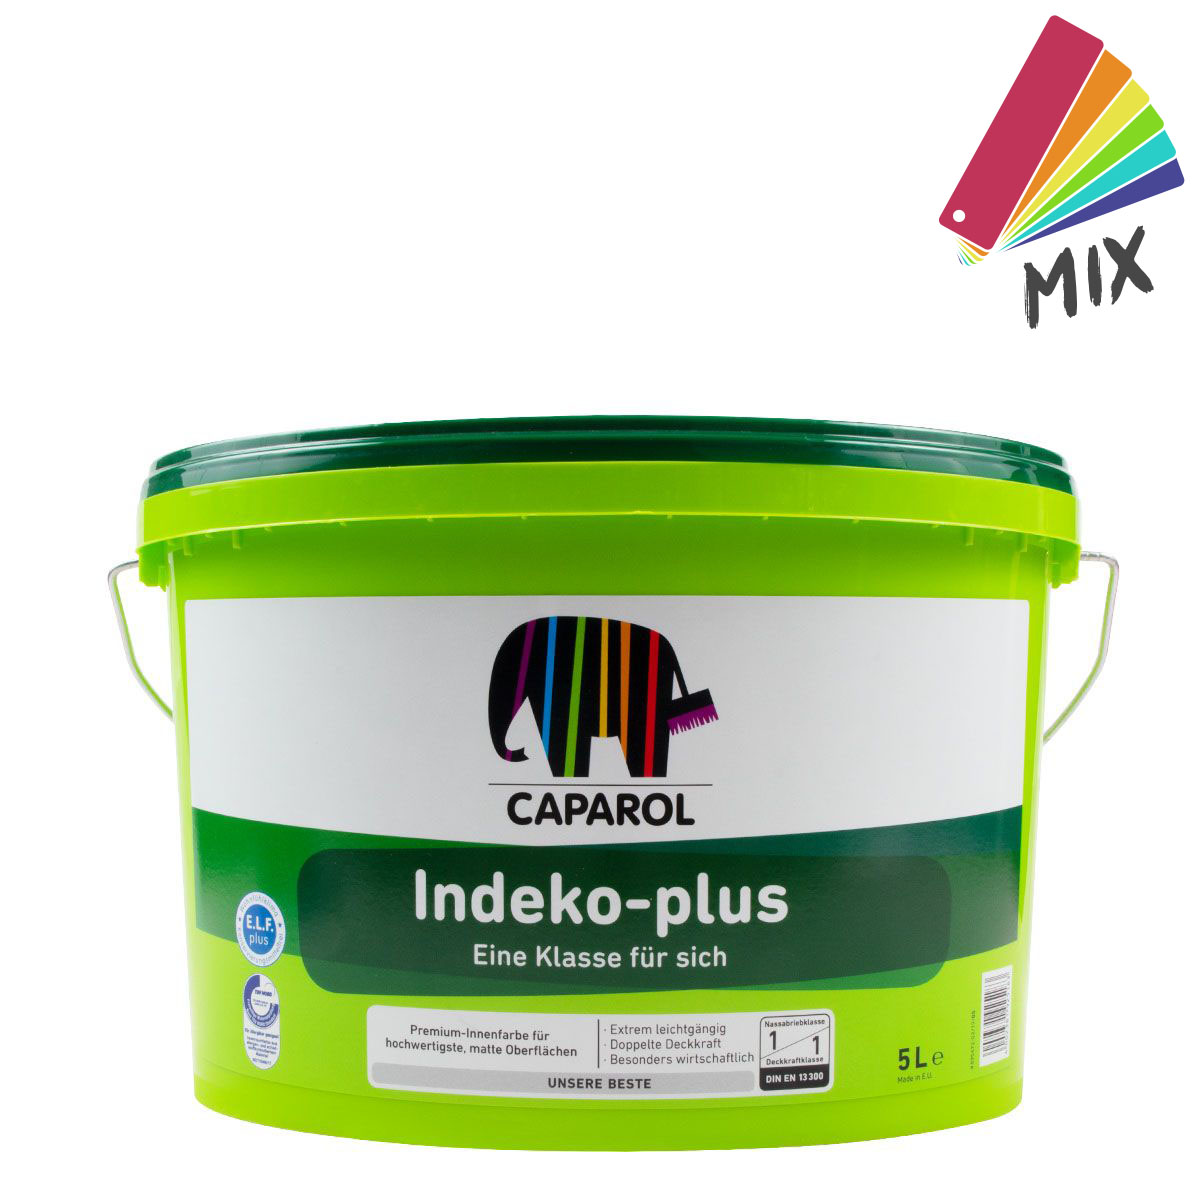 Caparol Indeko Plus 5L MIX PG A, premium Innenfarbe, hochdeckend